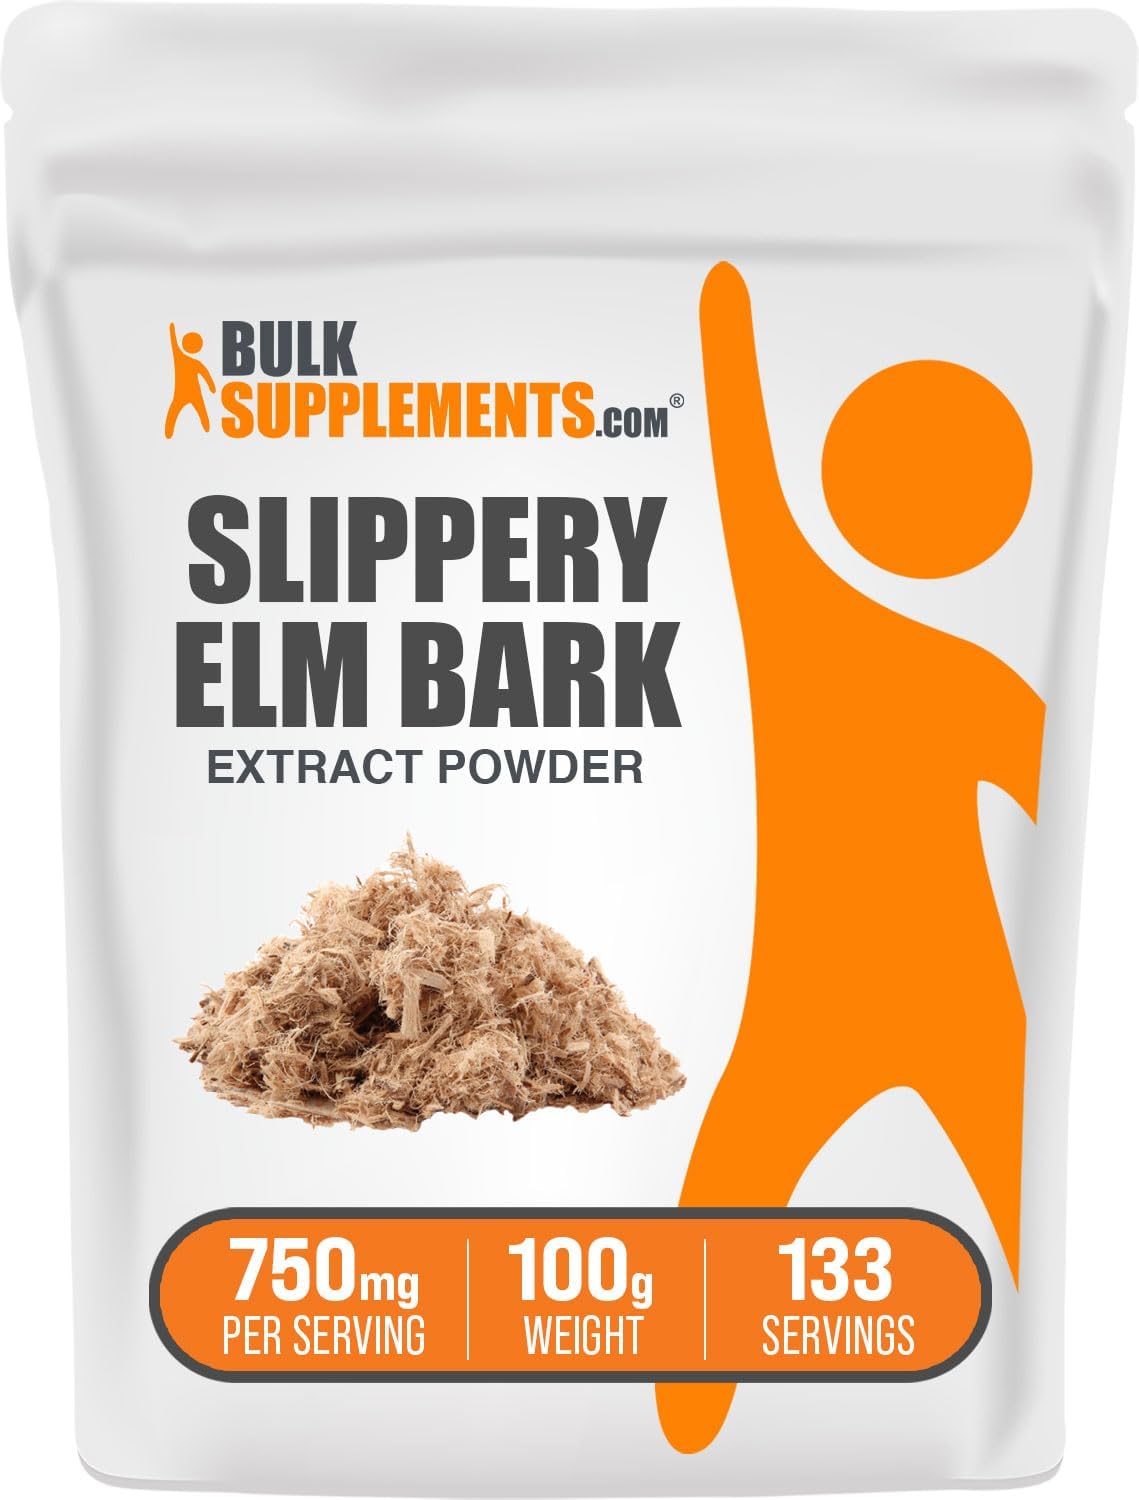 BulkSupplements.com Slippery Elm Bark Extract Powder - Ulmus Rubra, Slippery Elm Supplement, Slippery Elm Powder - for Urinary Tract Health, Gluten Free, 750mg per Serving, 100g (3.5 oz)